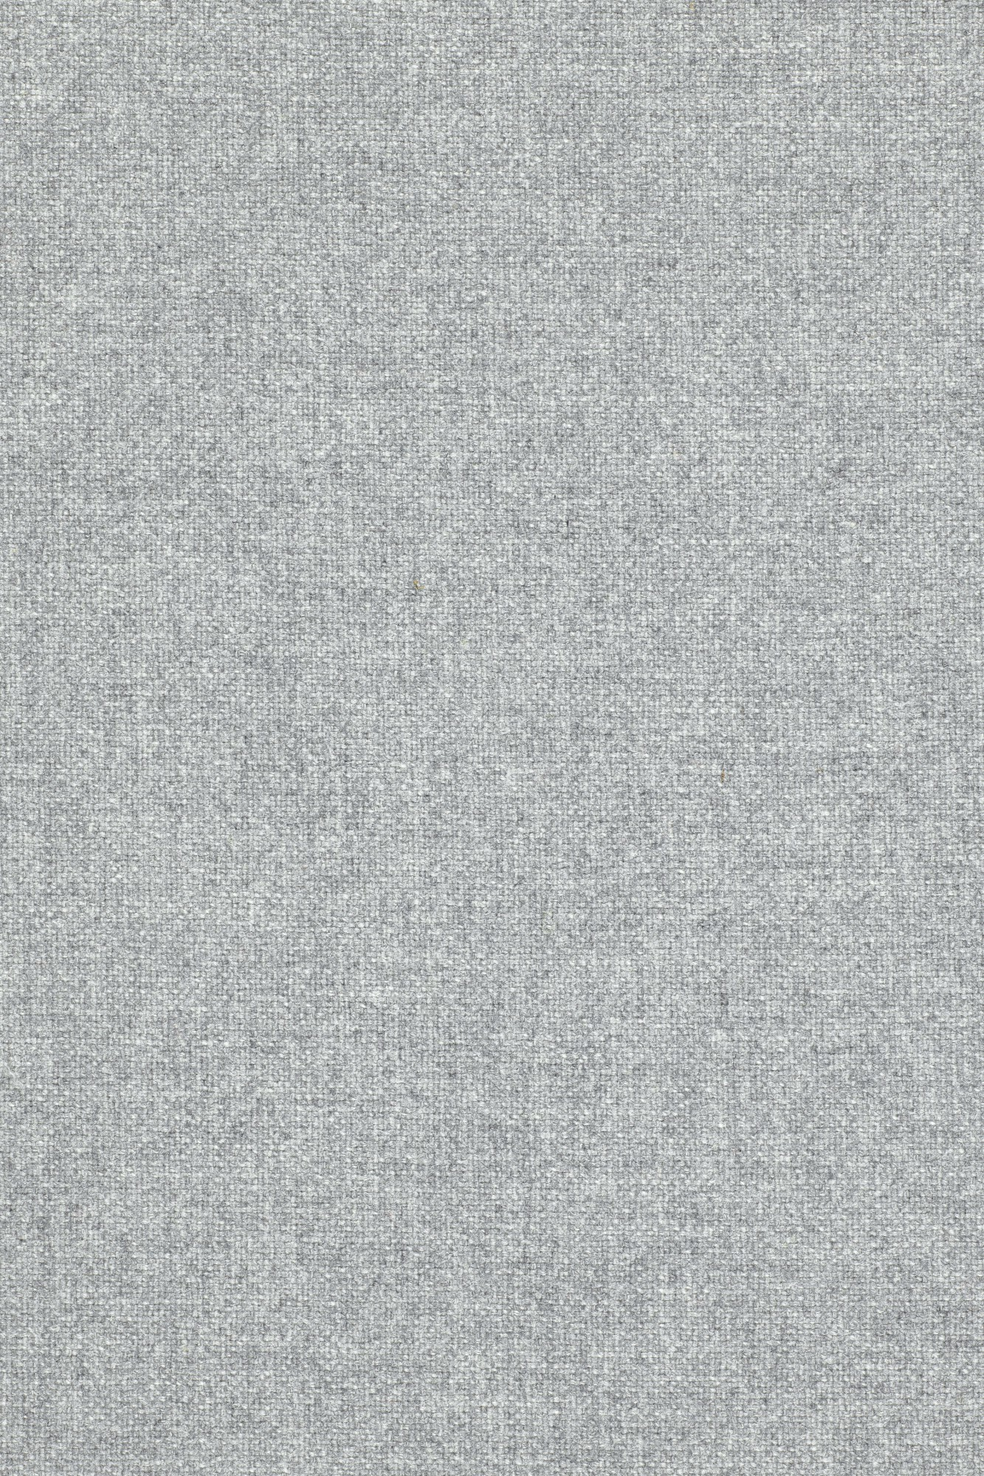 Fabric sample Tonica 2 171 grey